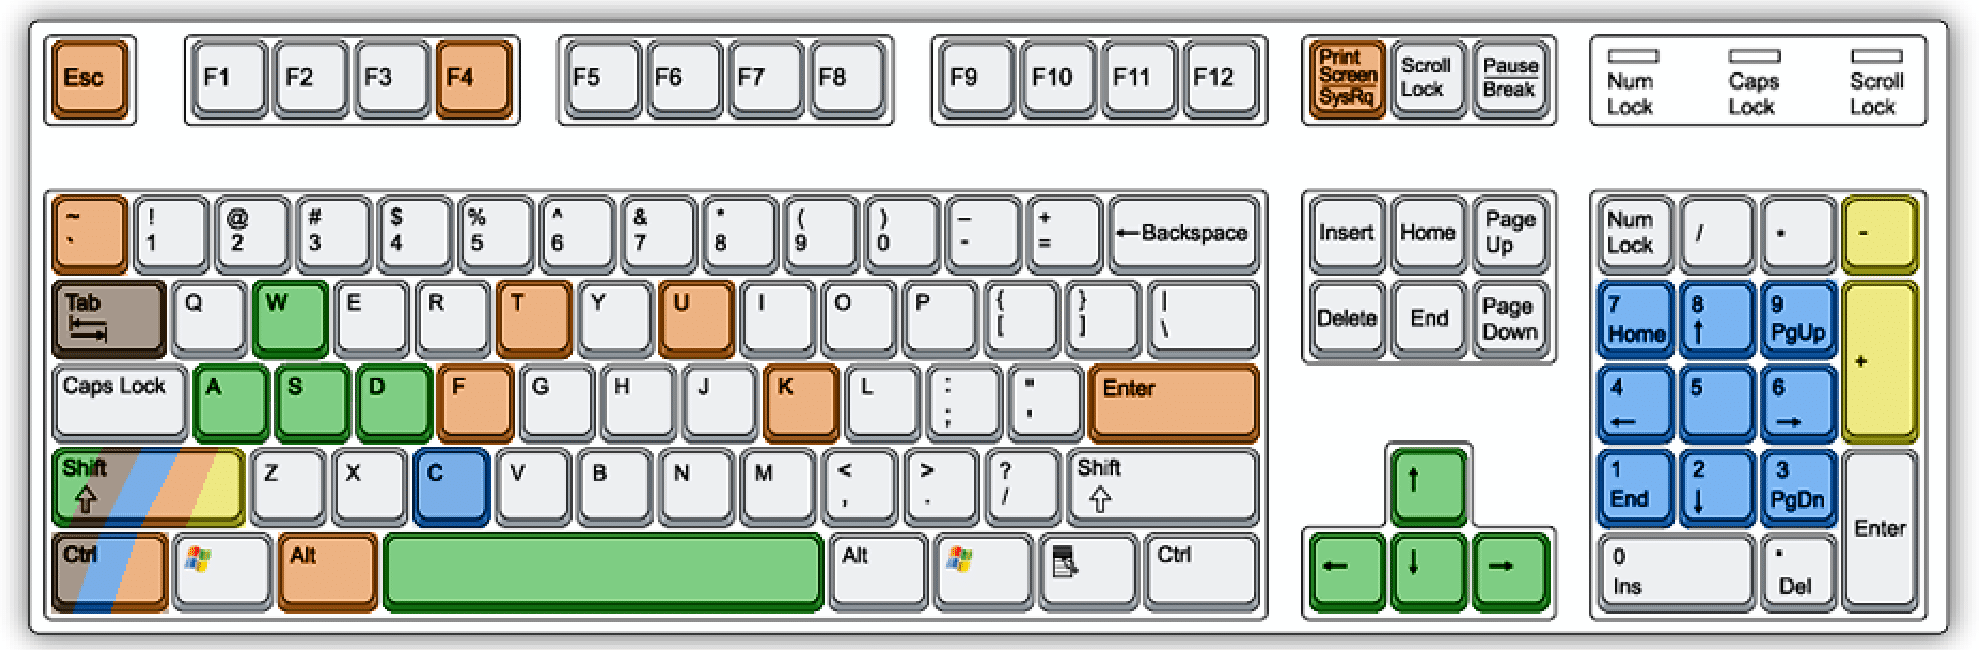 General keyboard layout